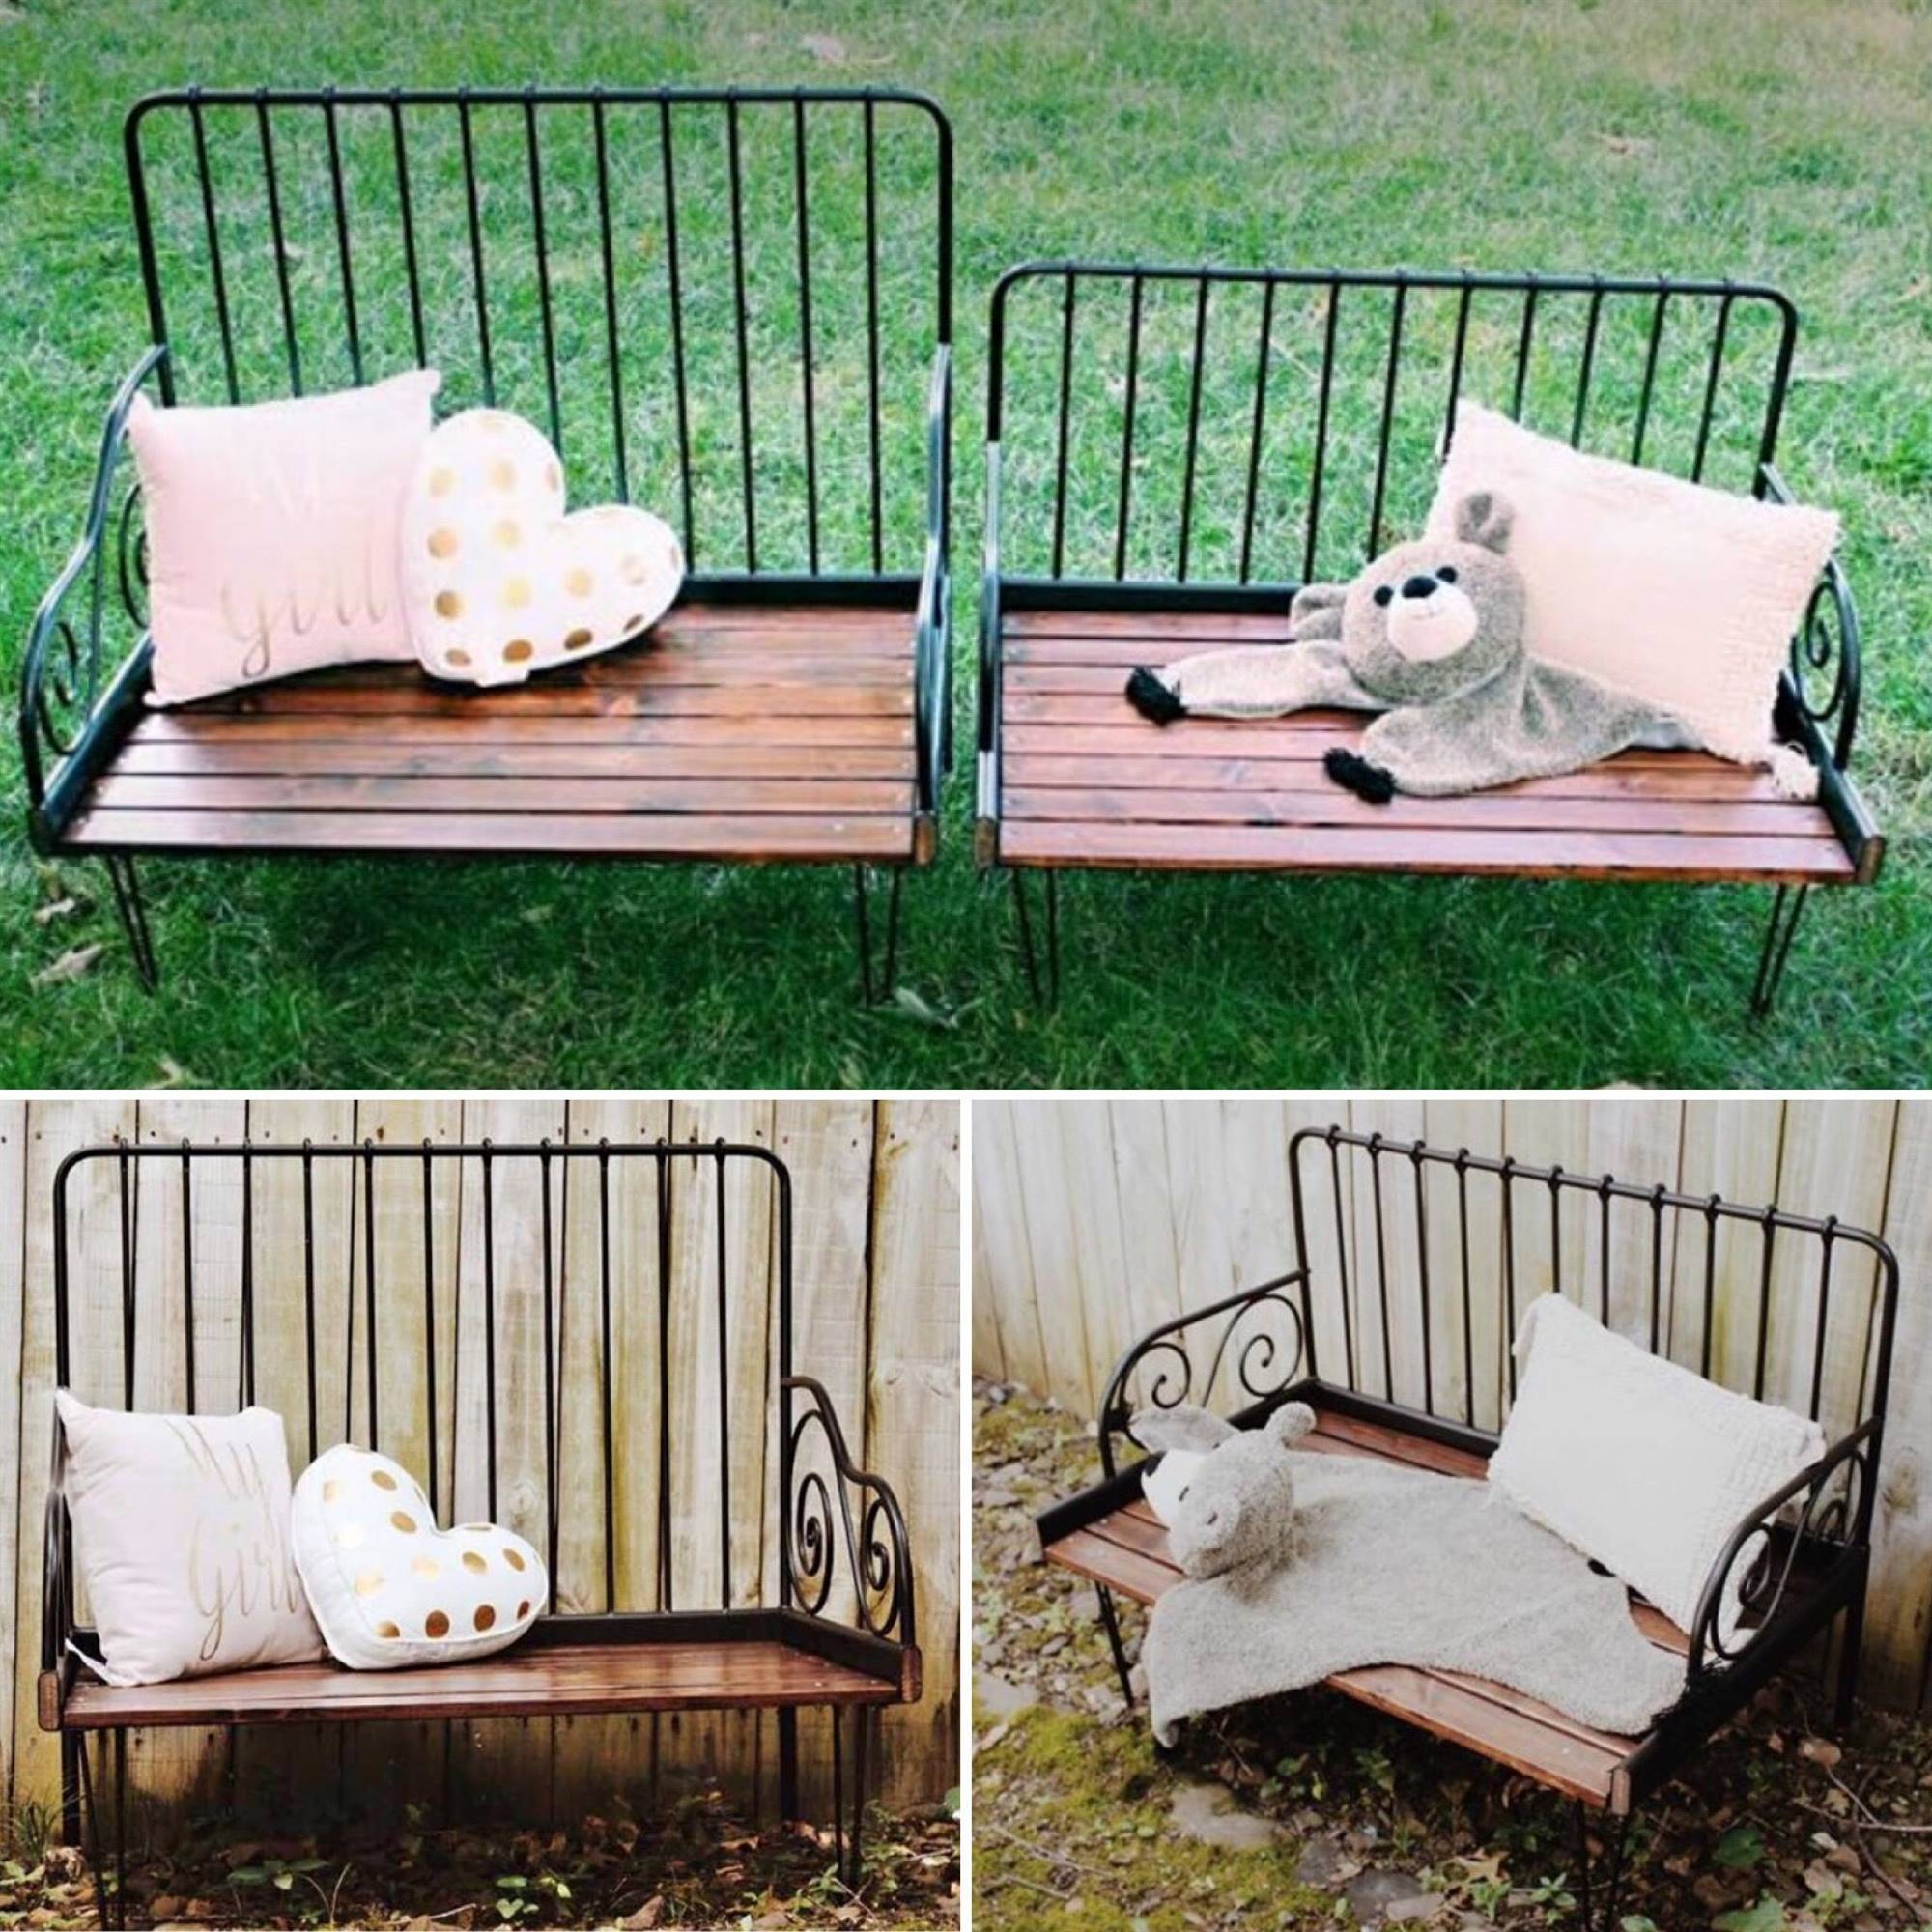 Repurposed IKEA minnen bed into children’s benches